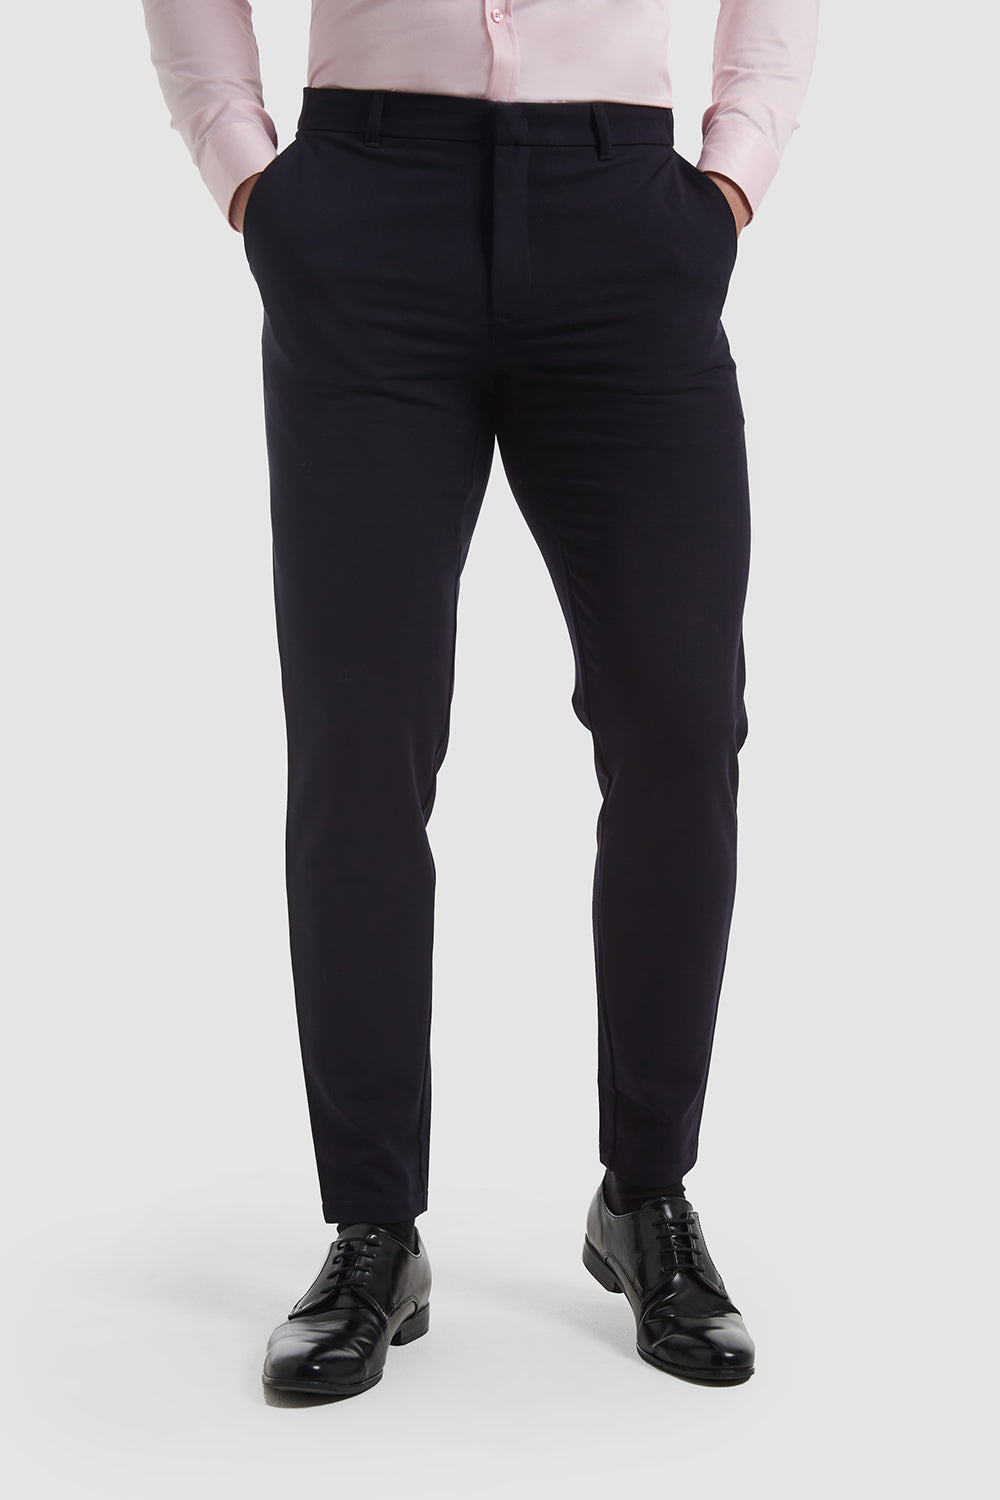 Buy Dockers Mens Athletic Fit Signature Khaki Lux Cotton Stretch Pants  New British 44W x 30L at Amazonin